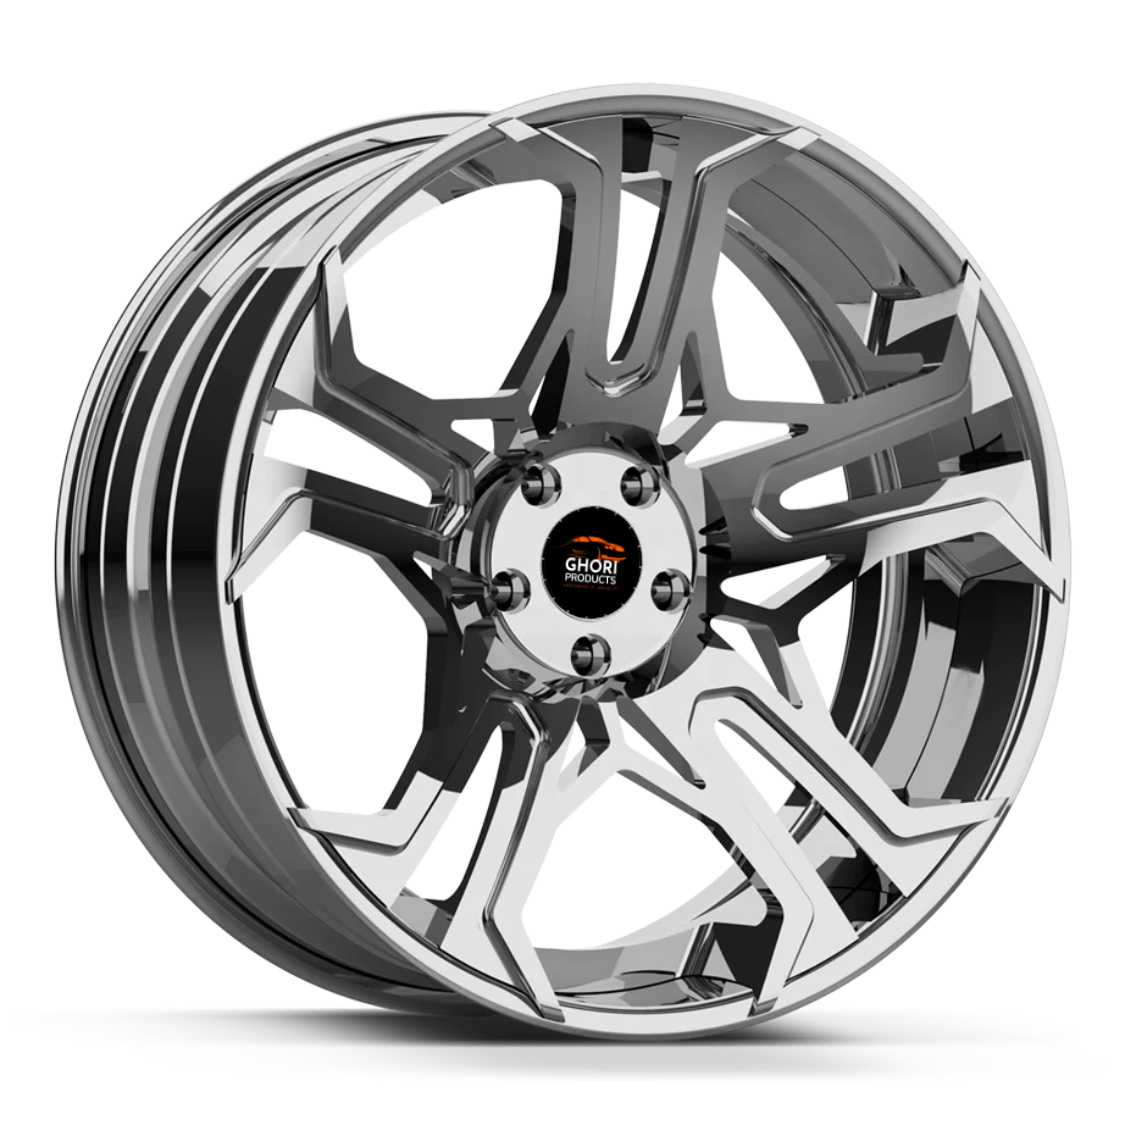 Aurora Pop - Forged Aluminum T317 Wheels for Tesla Model Y 5X114.3 (Set of 4)